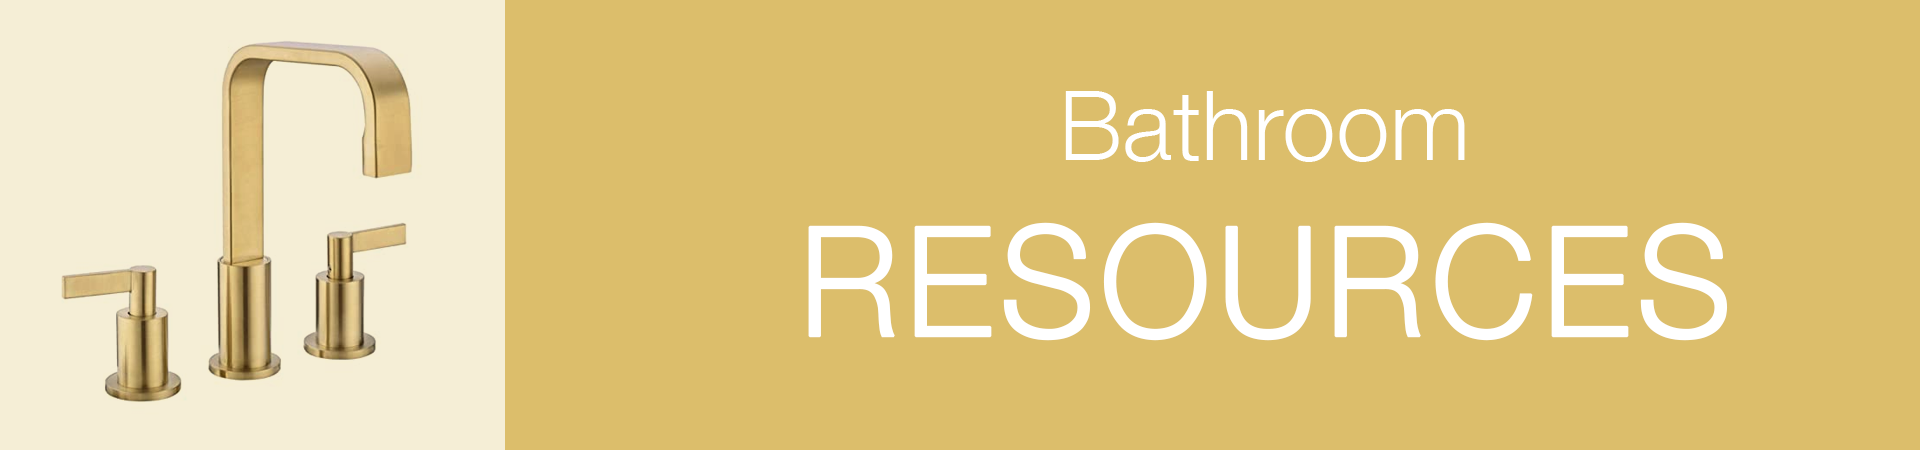 Bathroom Resources - Aluids